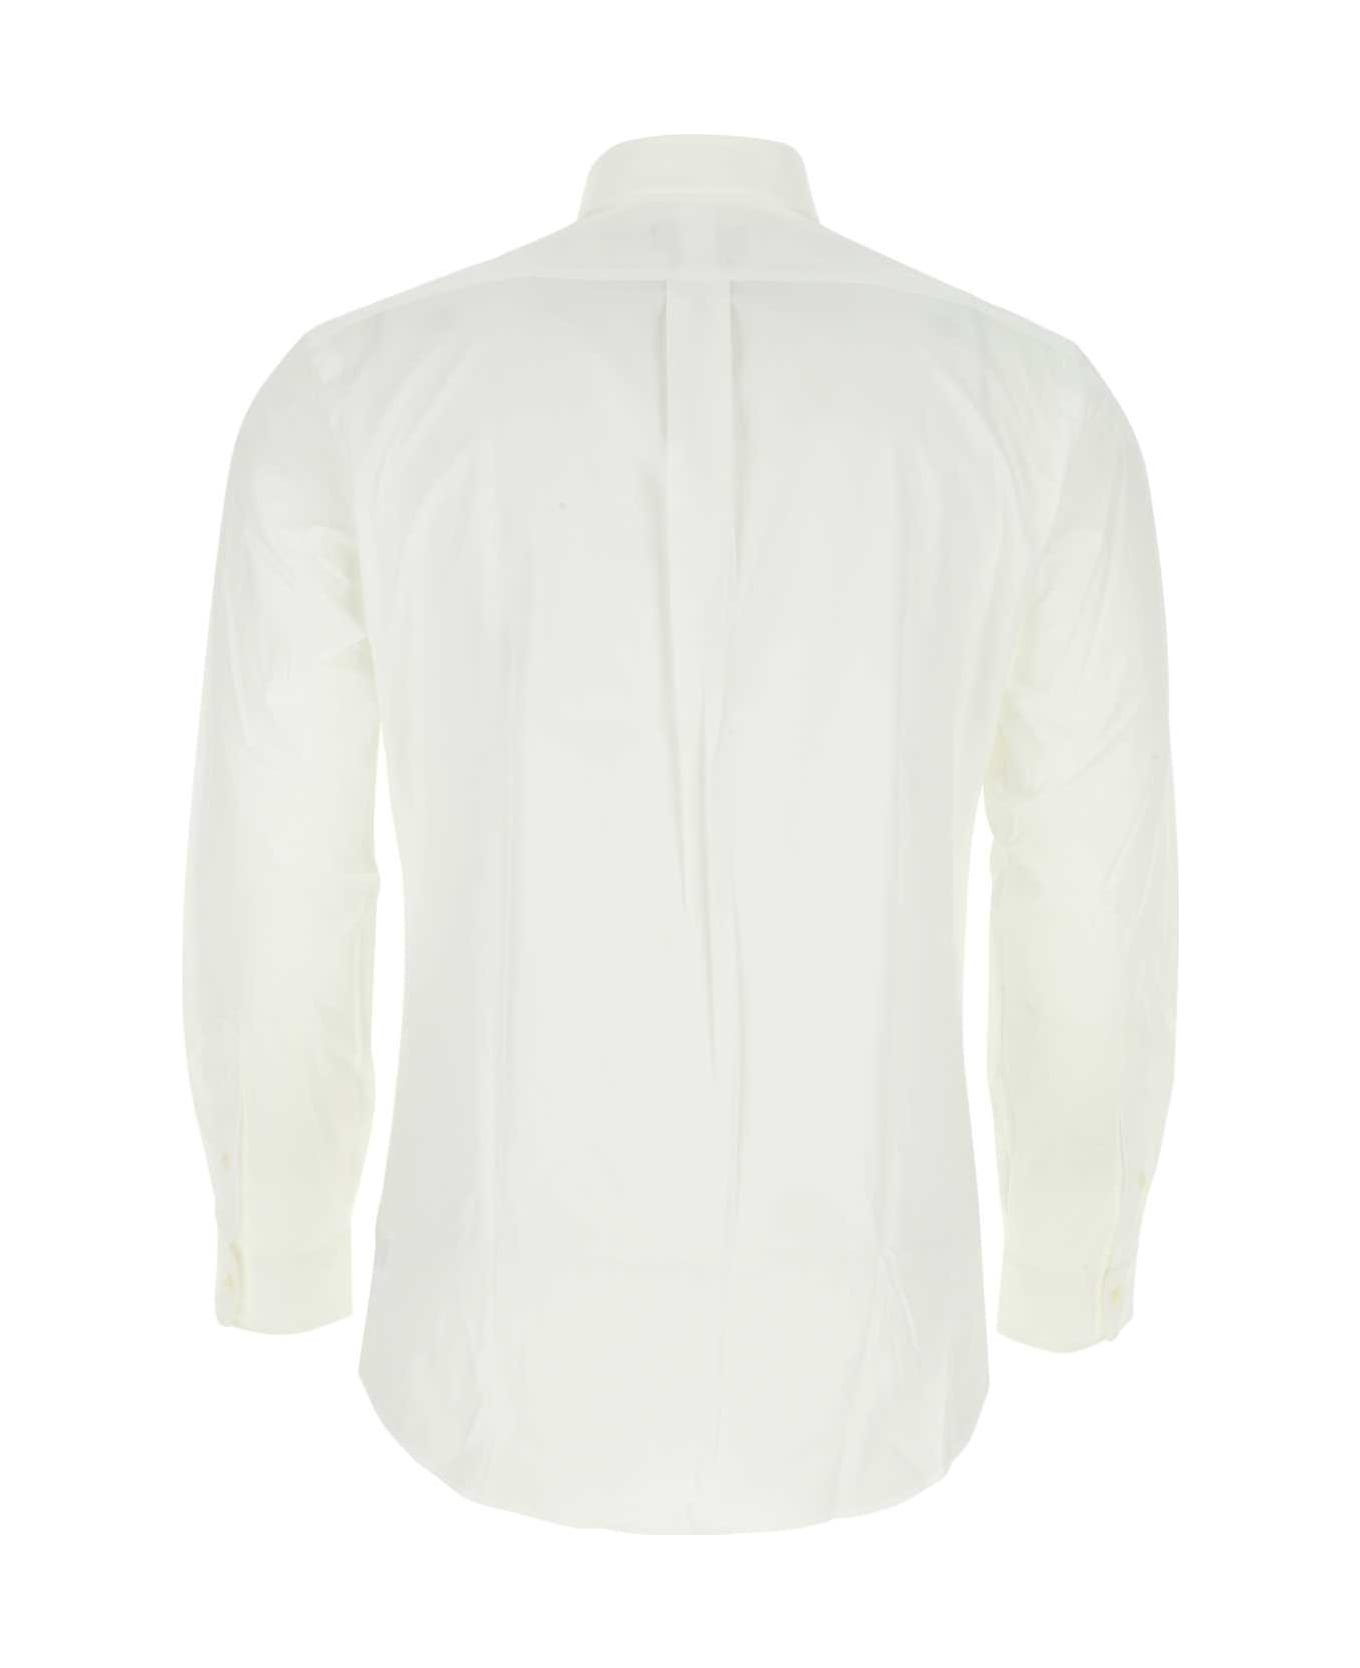 Polo Ralph Lauren White Stretch Cotton Shirt - White